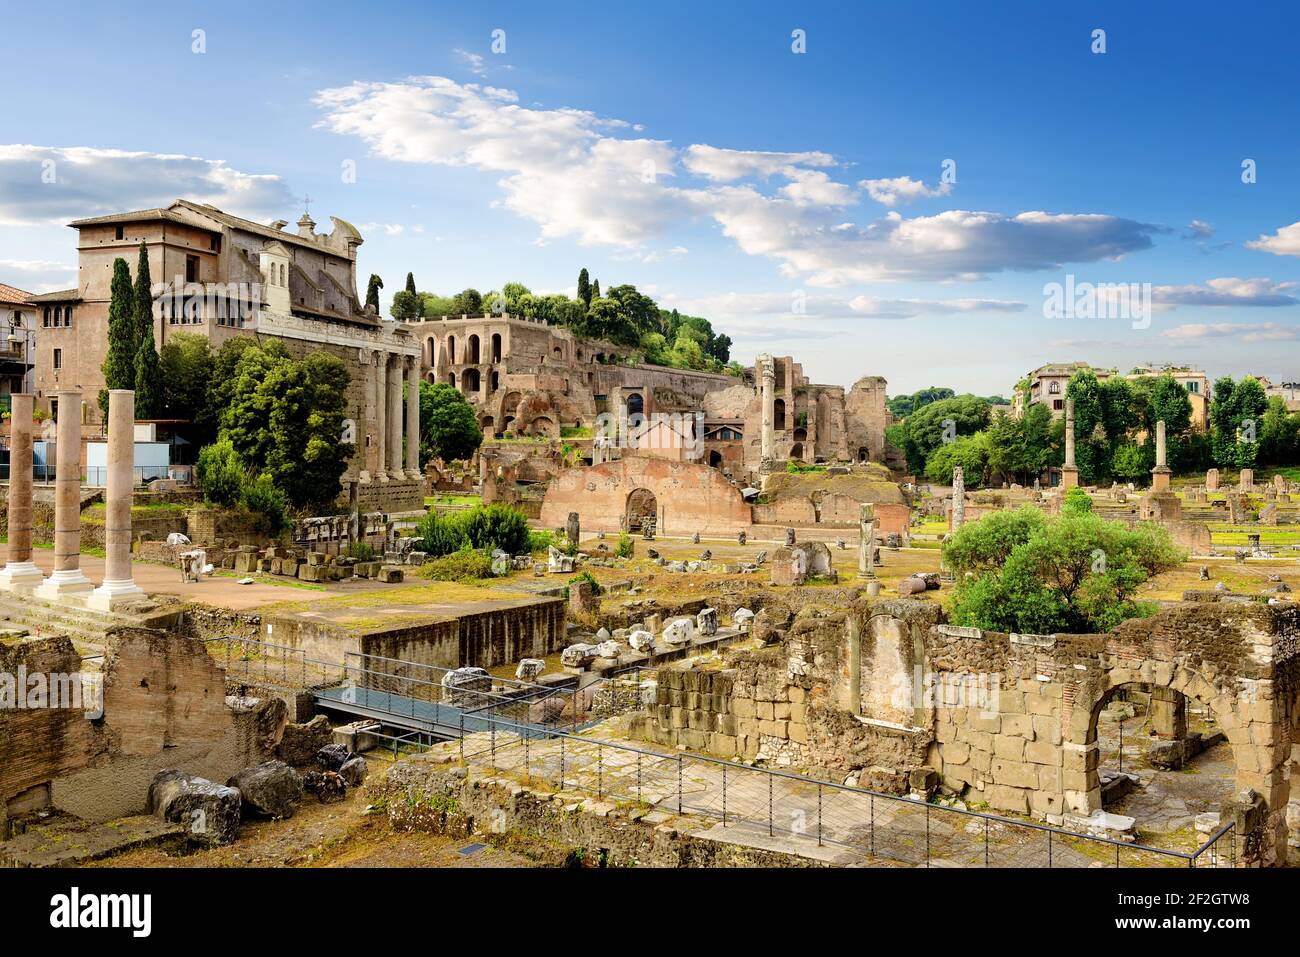 Ruins of Roman Forum in summer, Italy Stock Photo